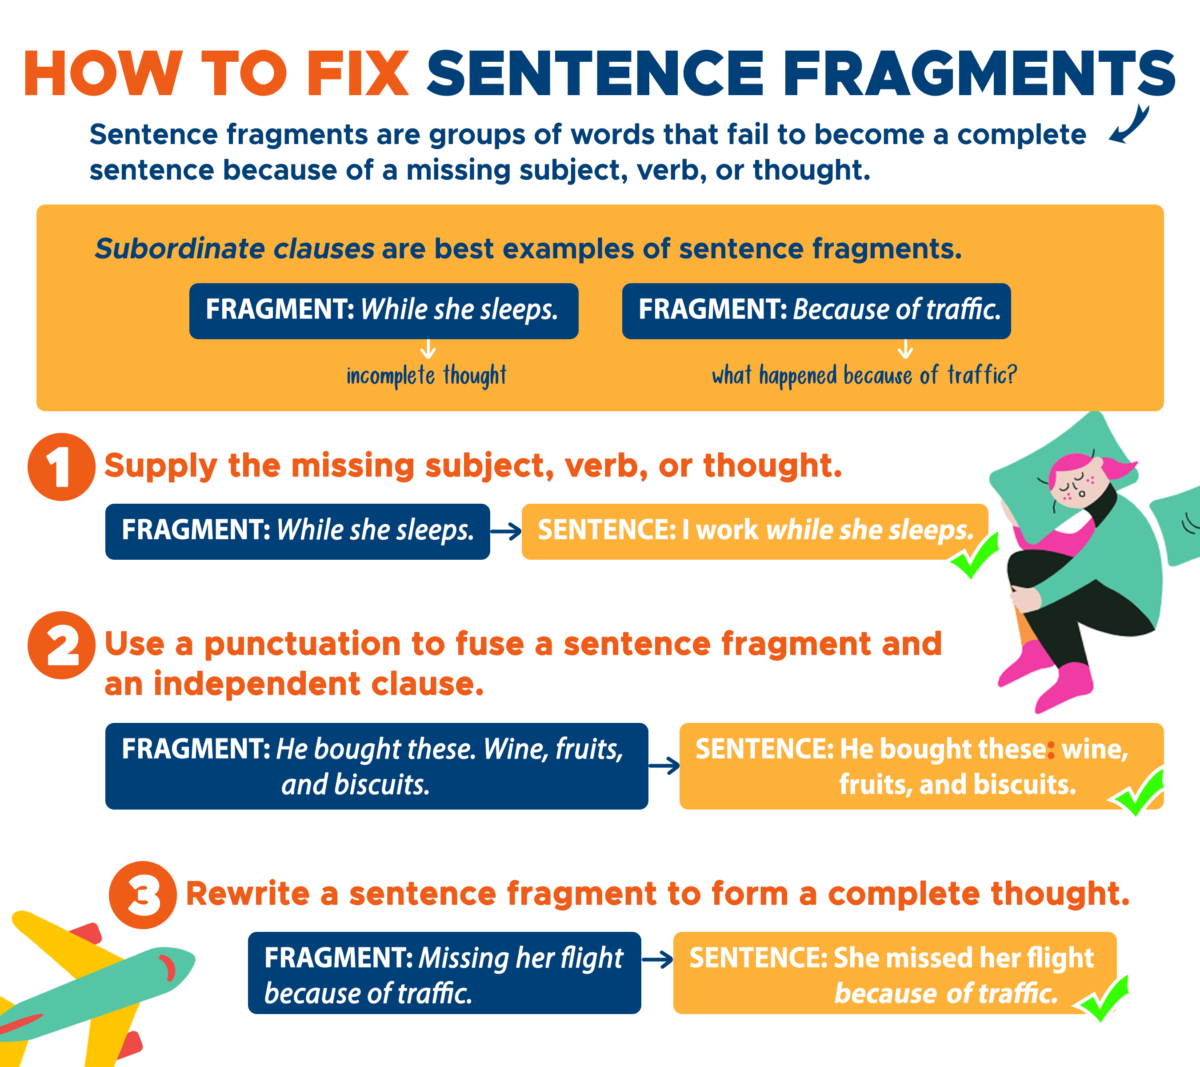 whats fragment sentence